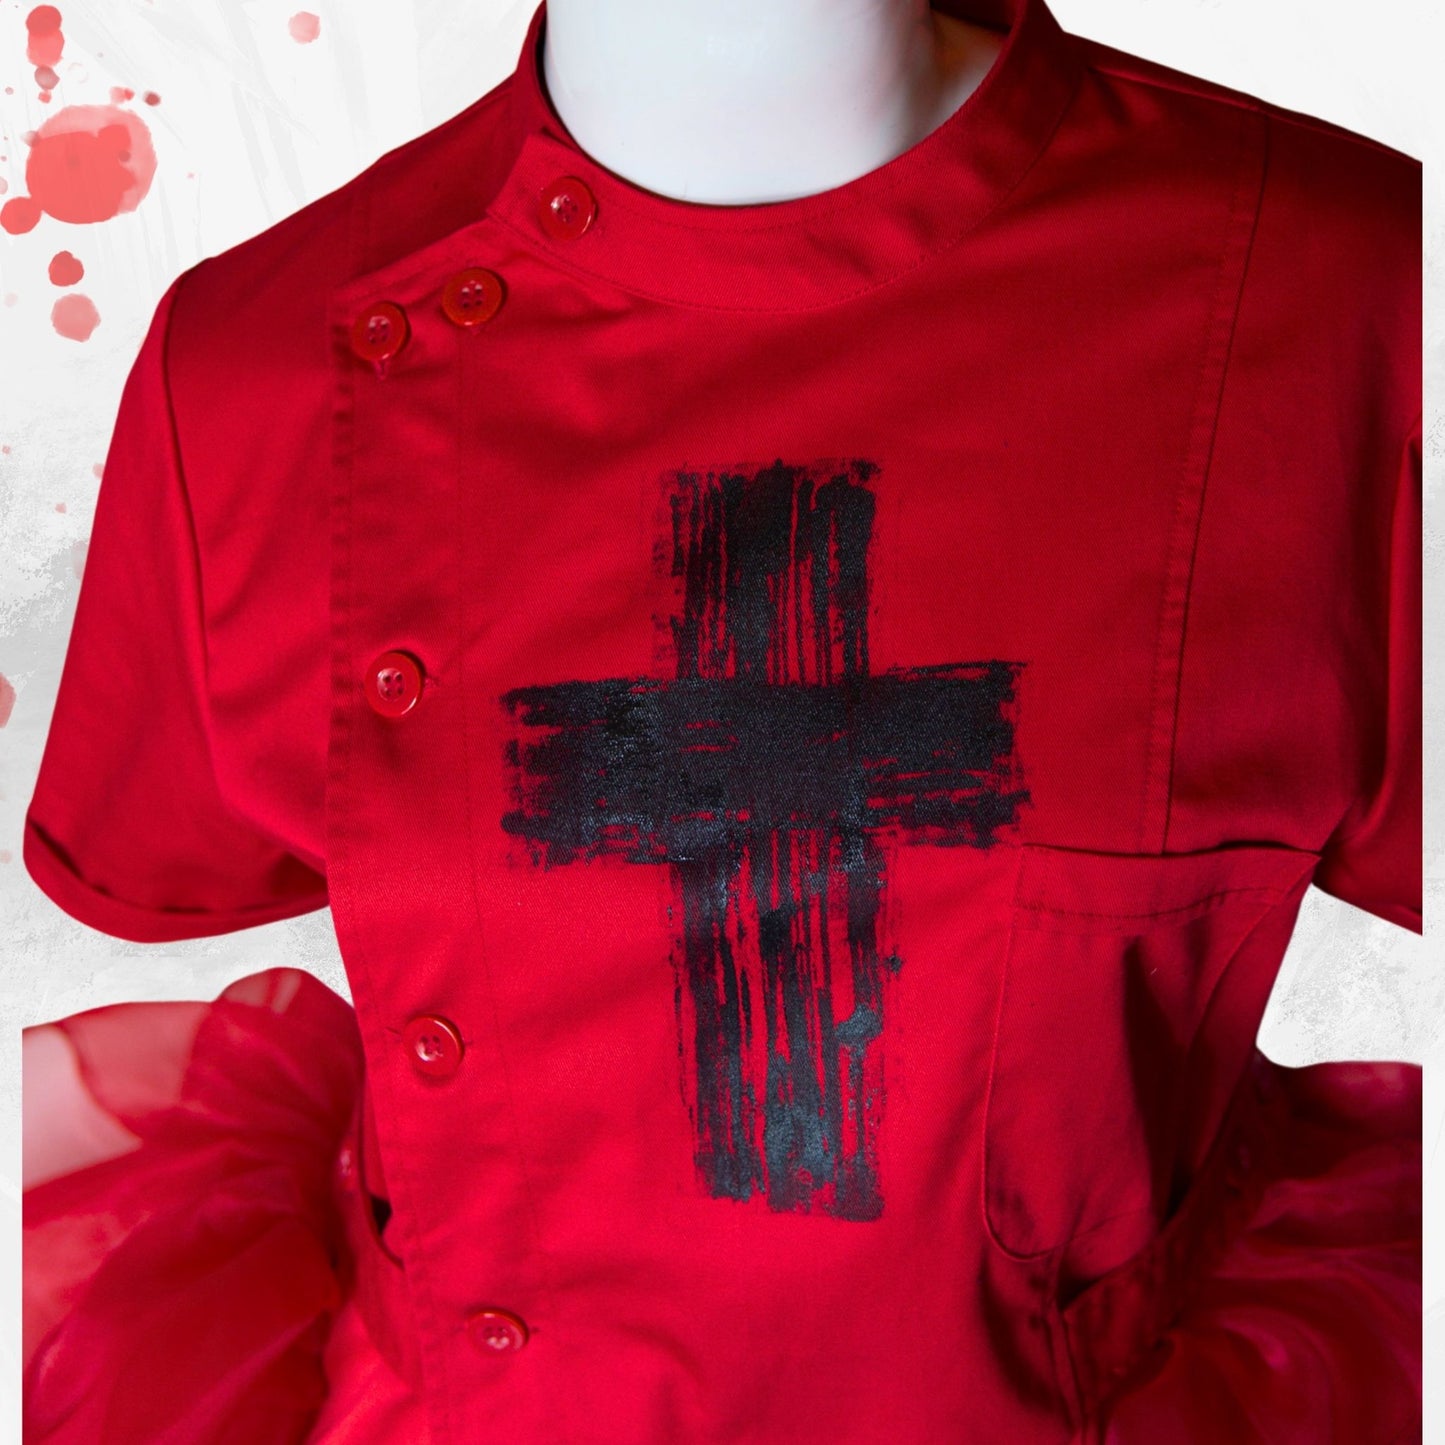 NEW! Red Gothic Nurse Dress　